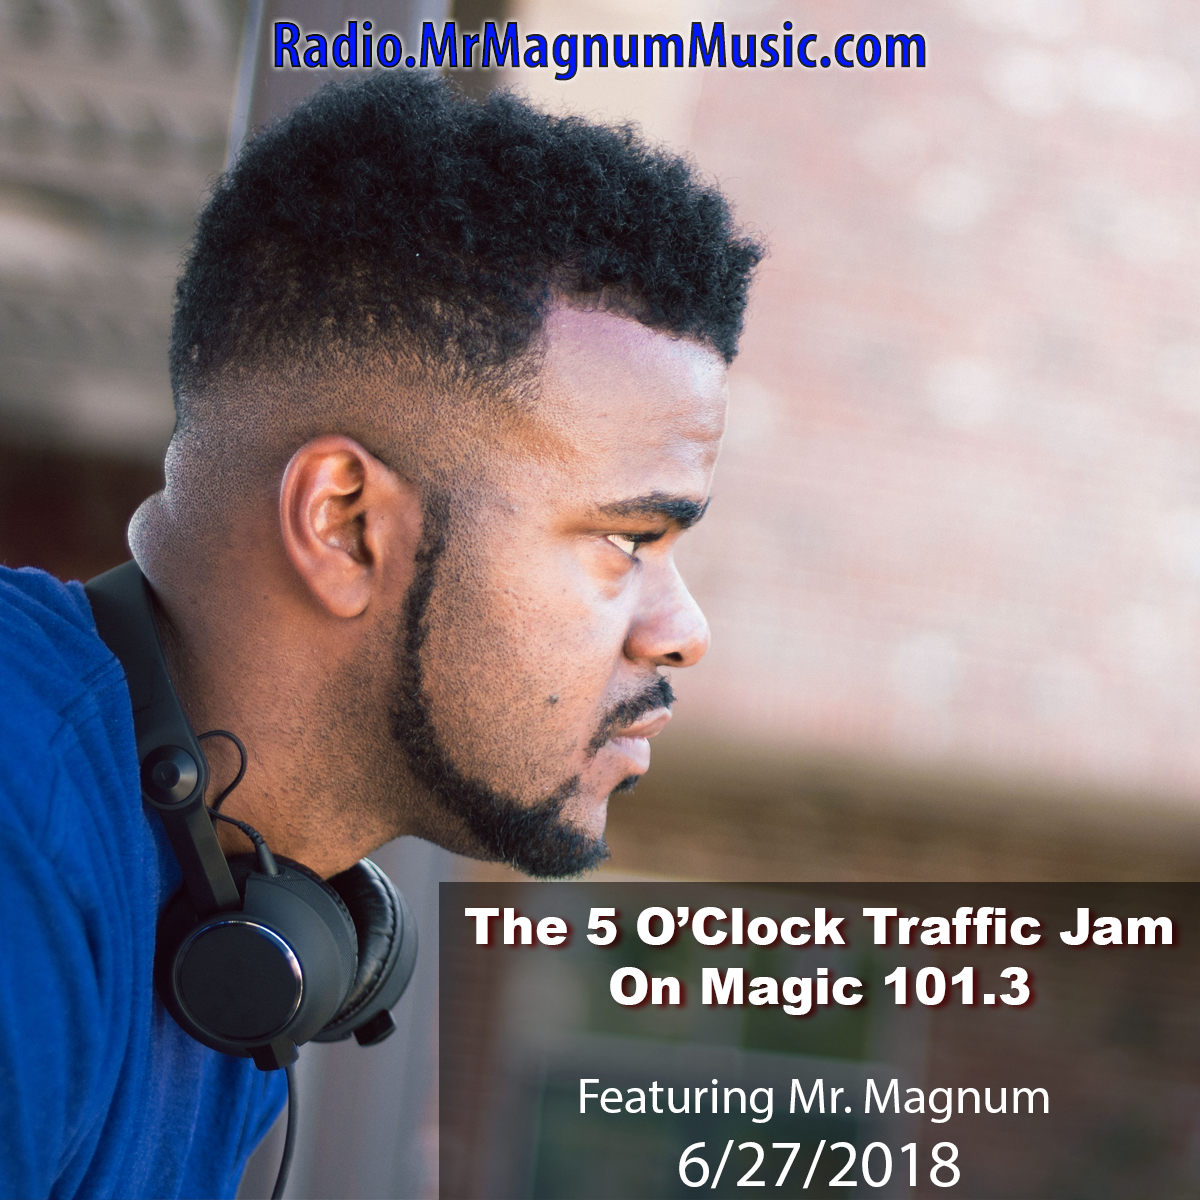 The 5 O'Clock Traffic Jam 20180627 featuring Gainesville's #1 DJ, Mr. Magnum on Magic 101.3